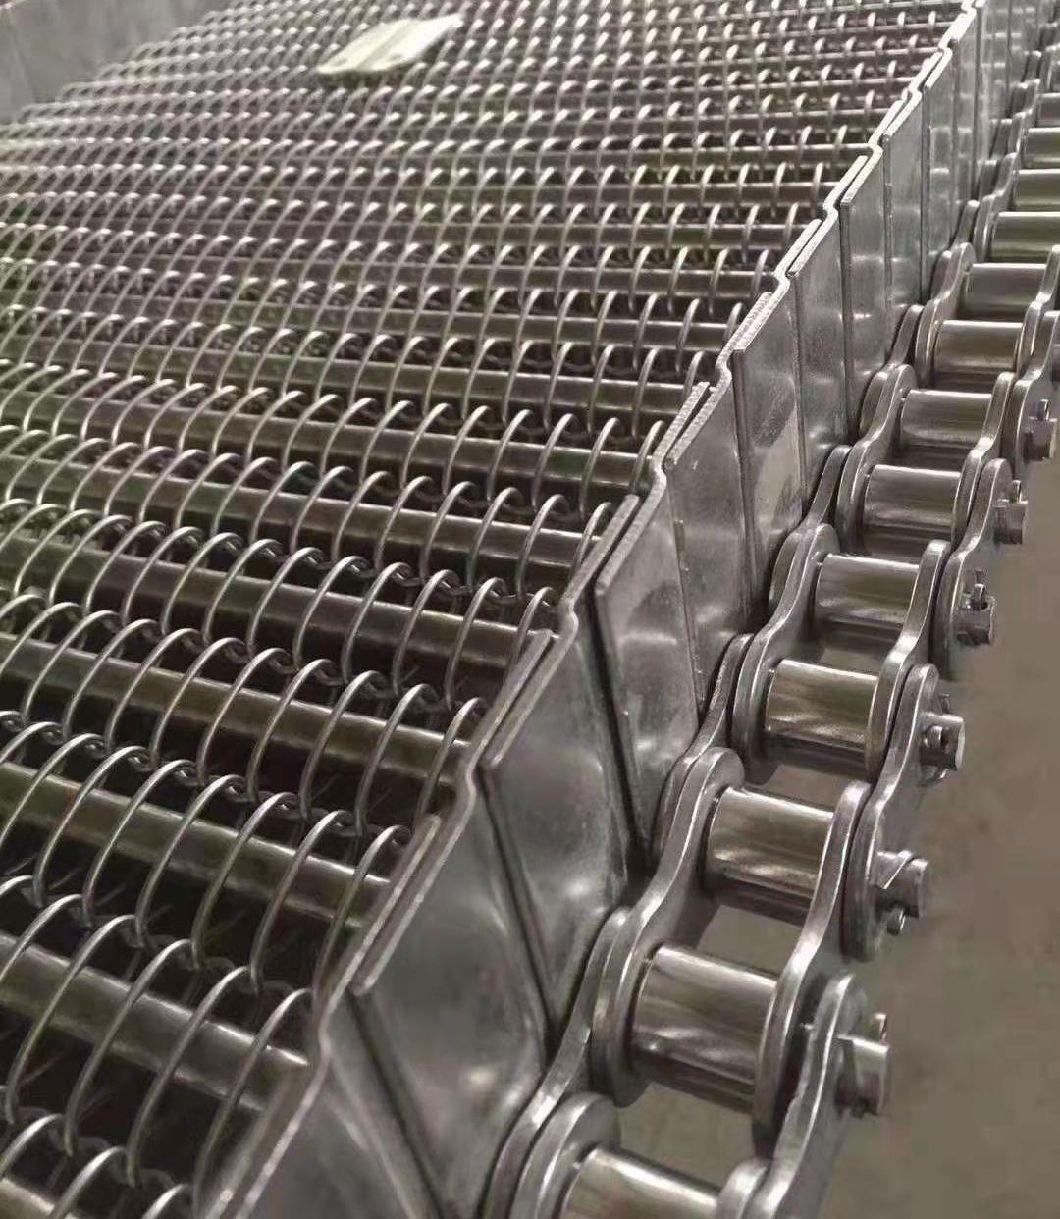 Heat Resistant Stainless Steel Conveyor Belt for Food Drying